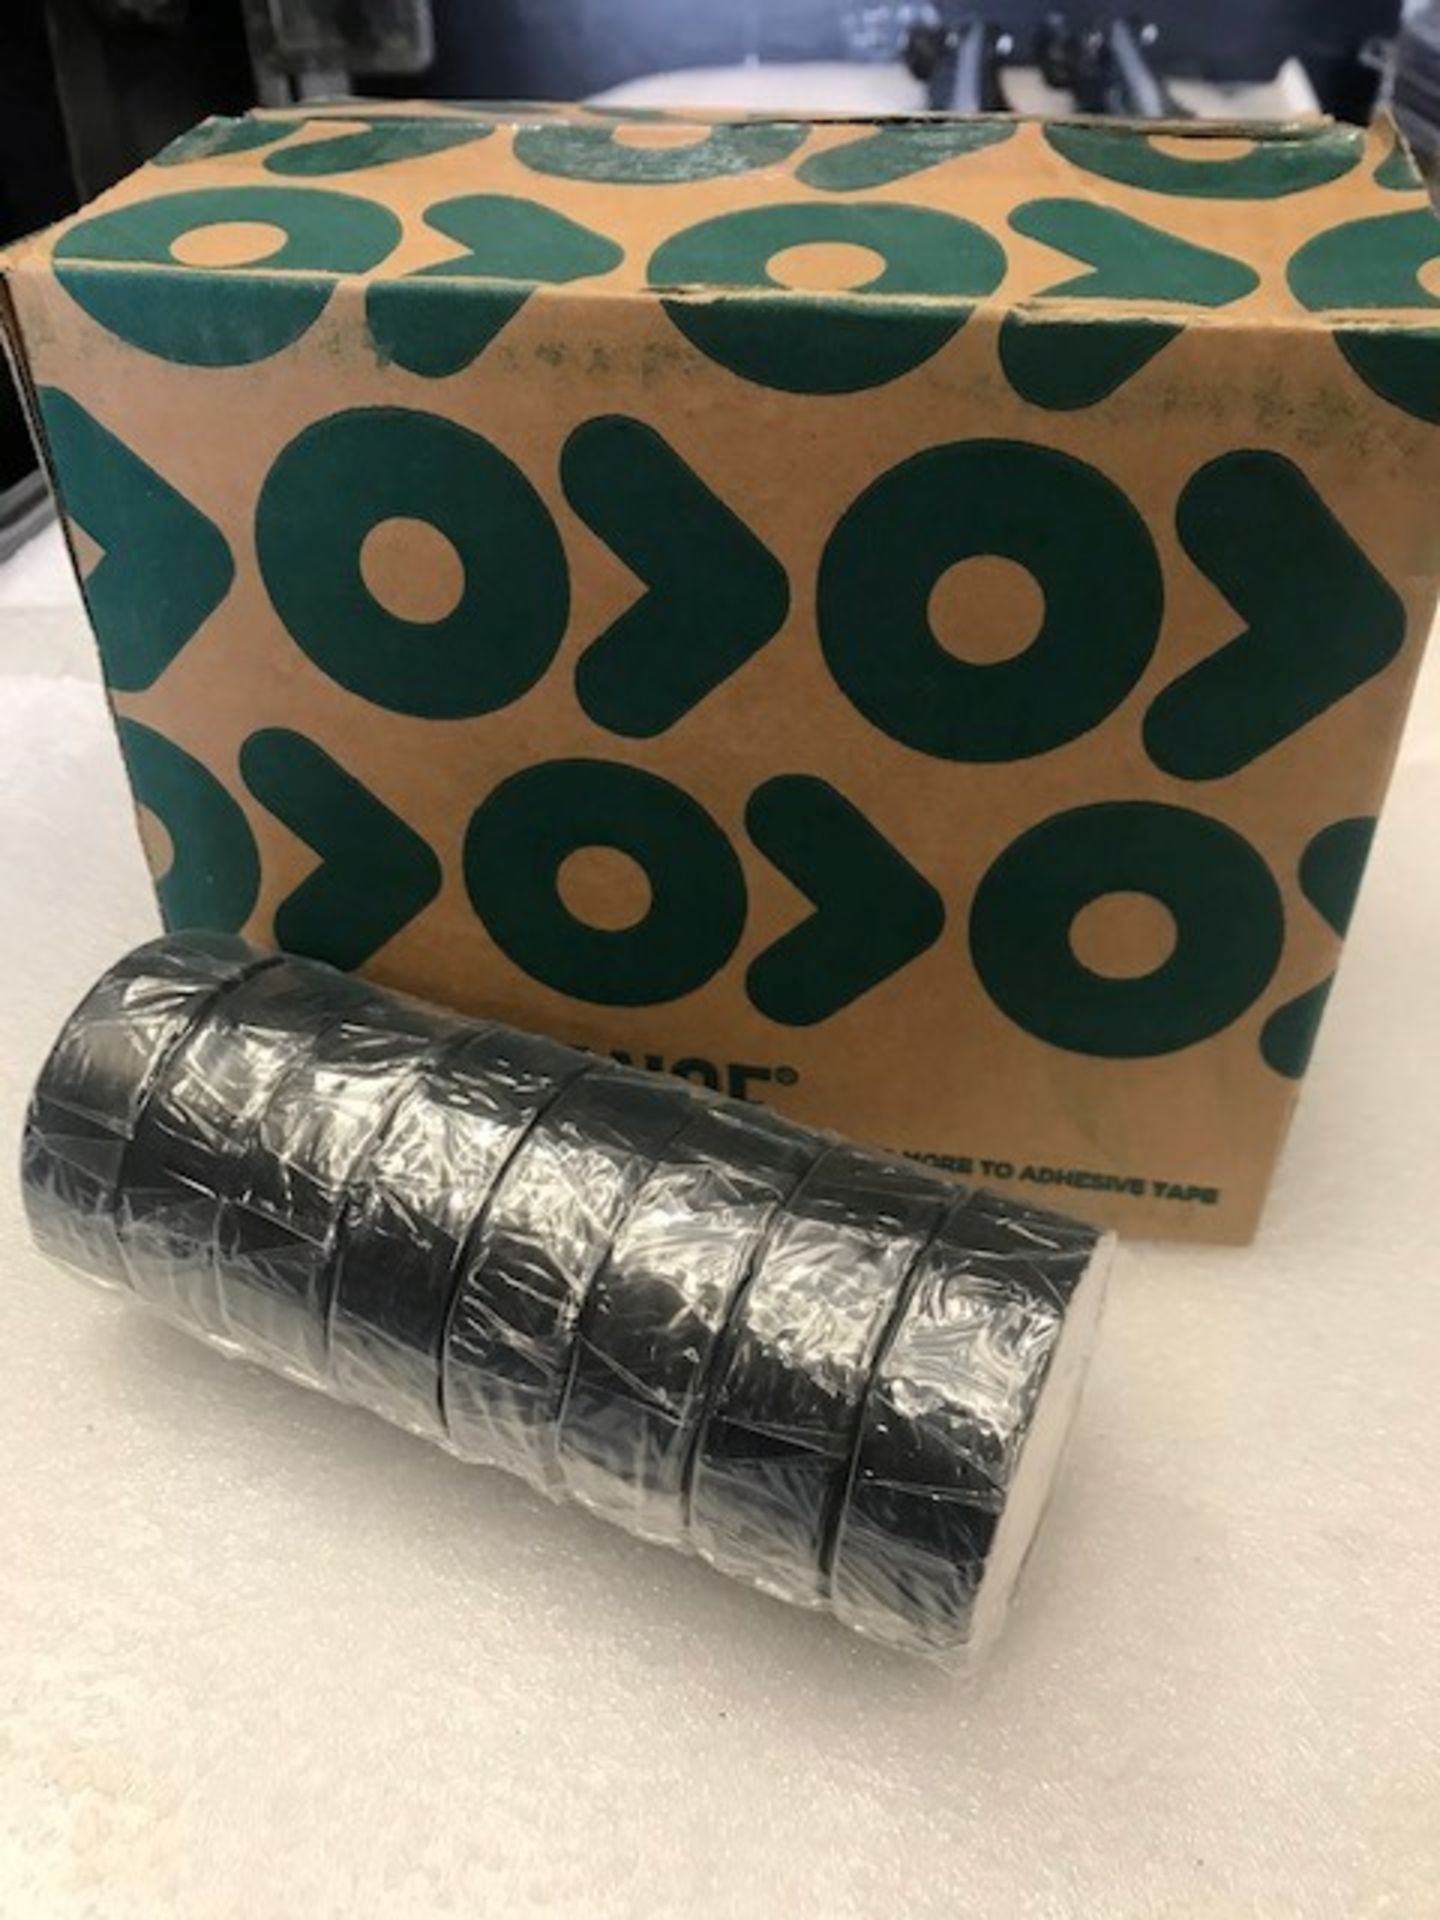 48 x Rolls Of Black PVC Tape - New & Boxed - Ref: 284 - CL581 - Location: Altrincham WA14